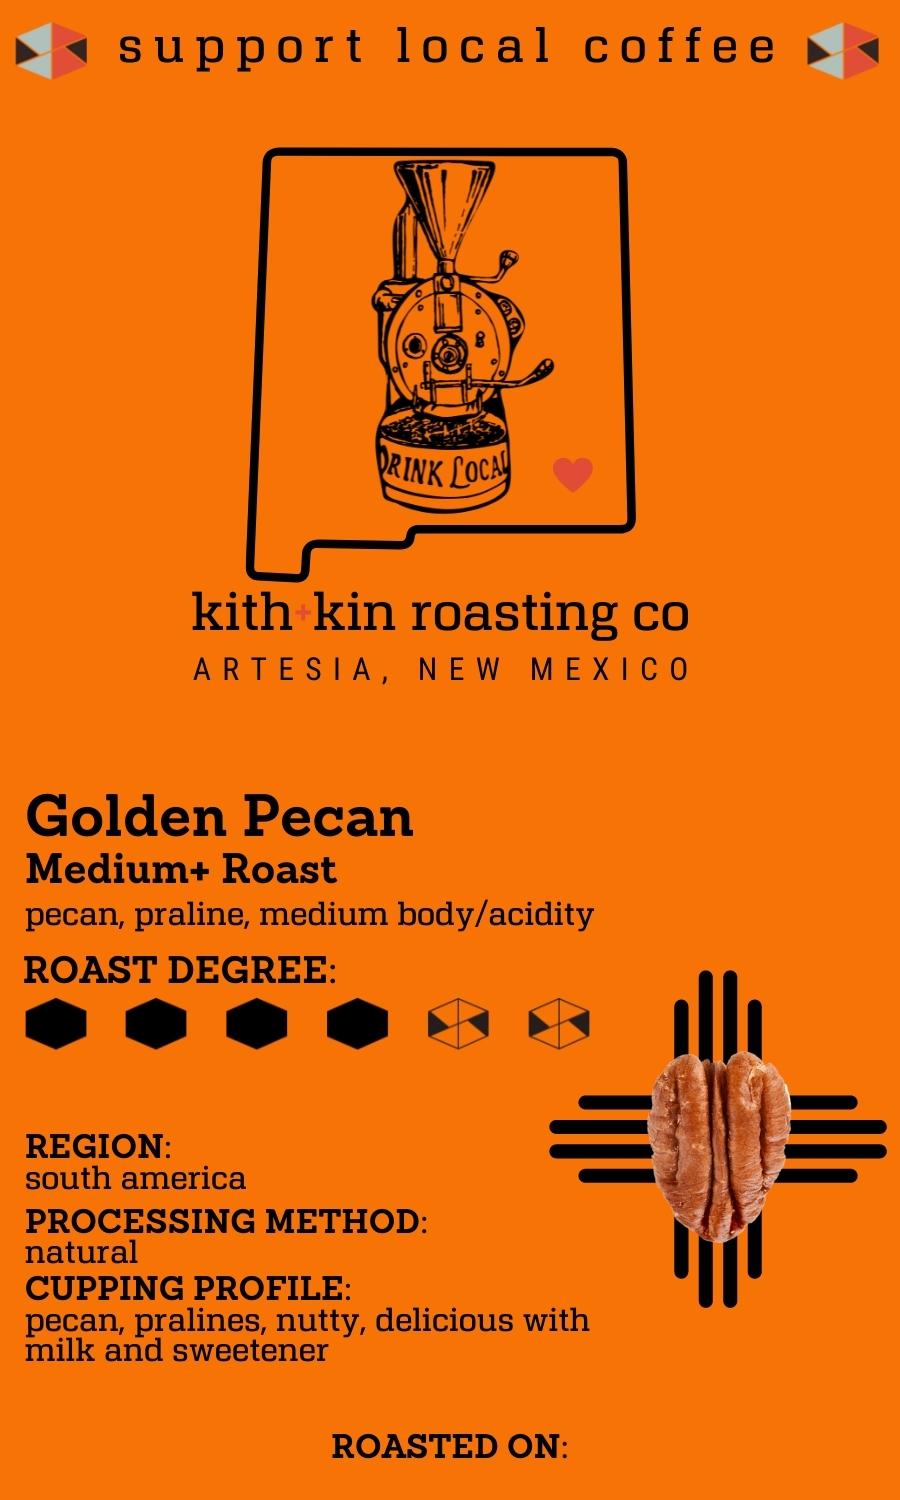 Golden Pecan (medium+ roast)